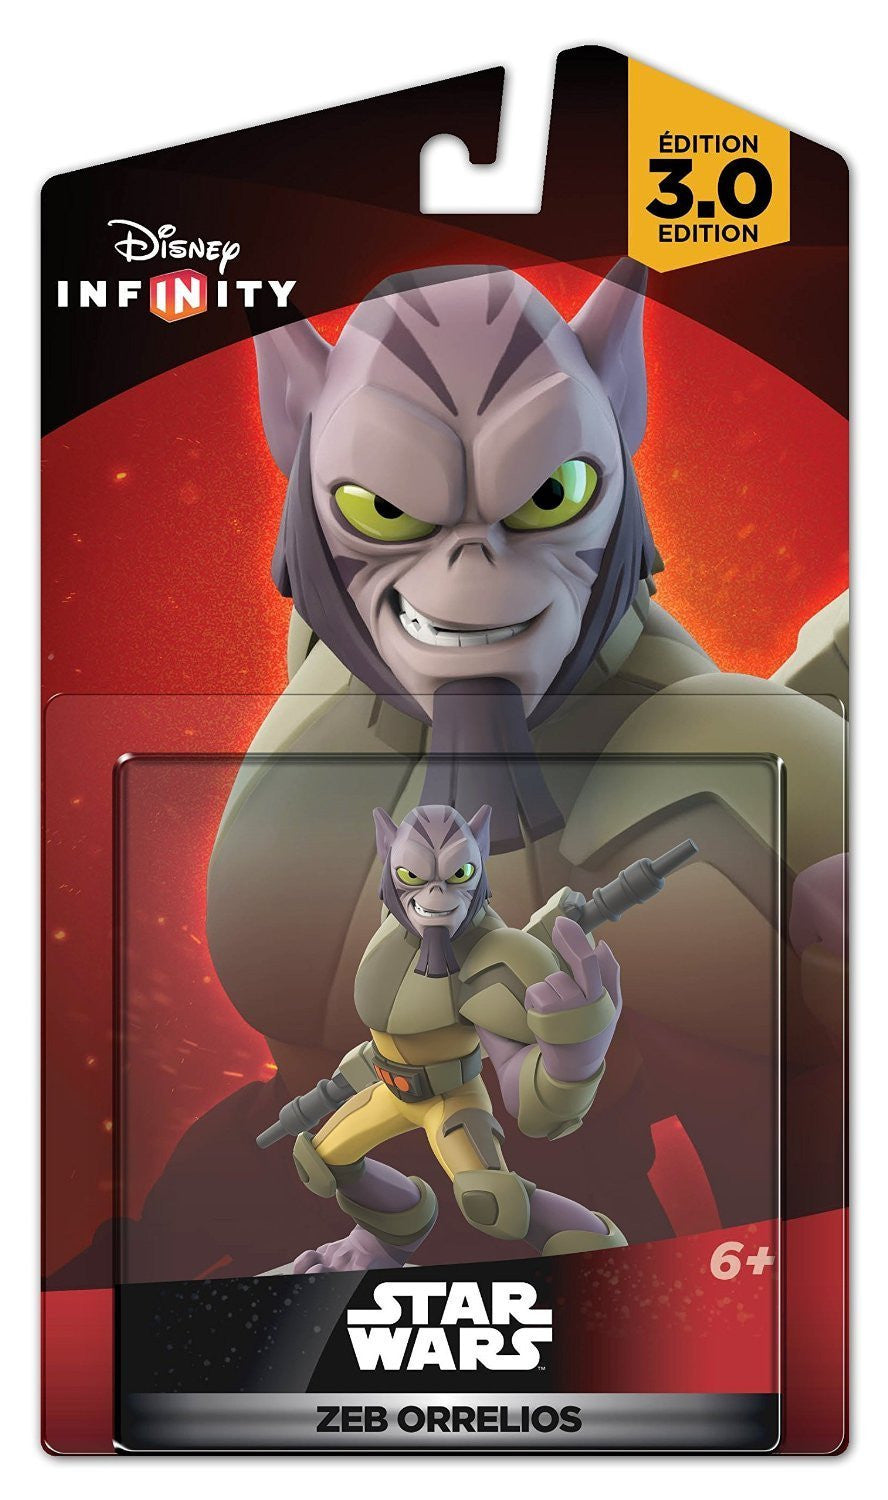 Disney Infinity 3.0 Edition: Star Wars Rebels Zeb Orrelios Figure